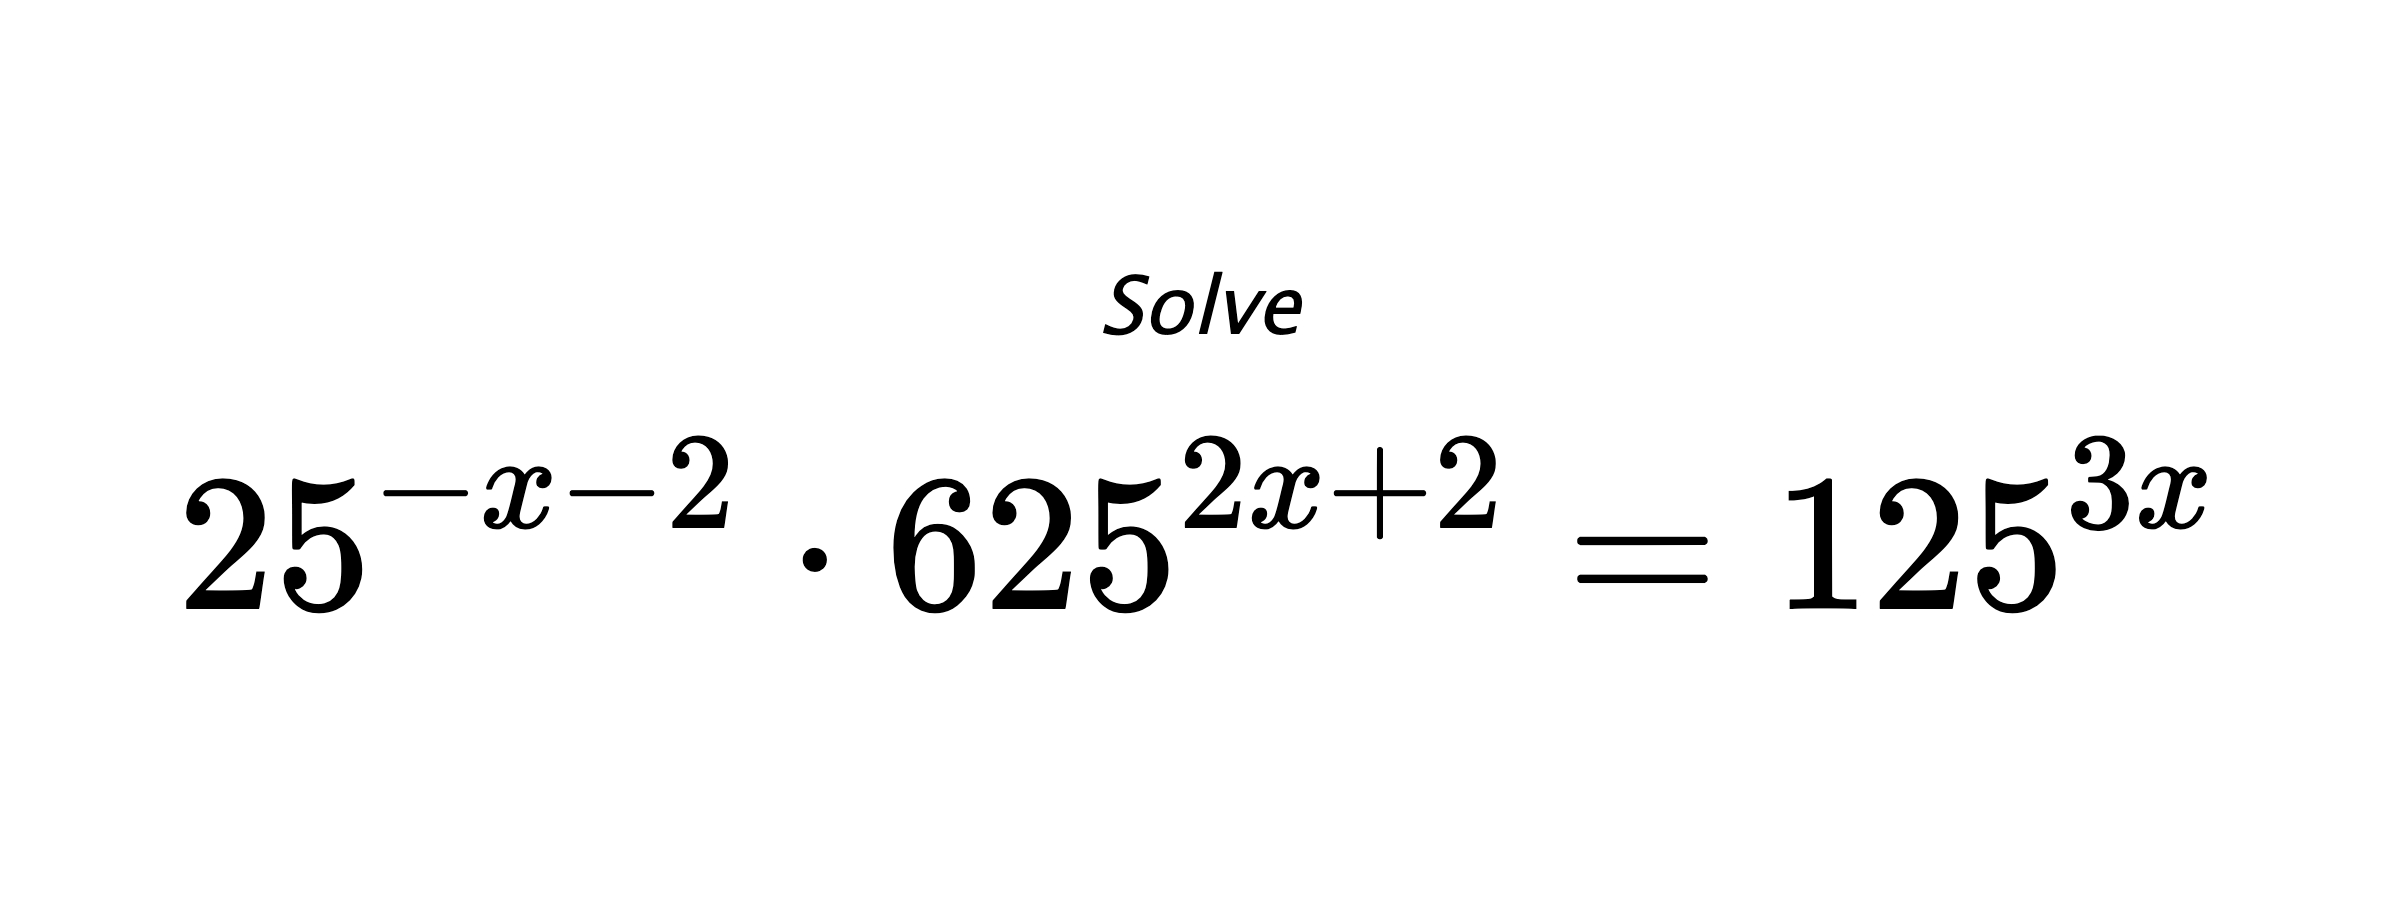 Solve $ 25^{-x-2} \cdot 625^{2x+2} = 125^{3x} $